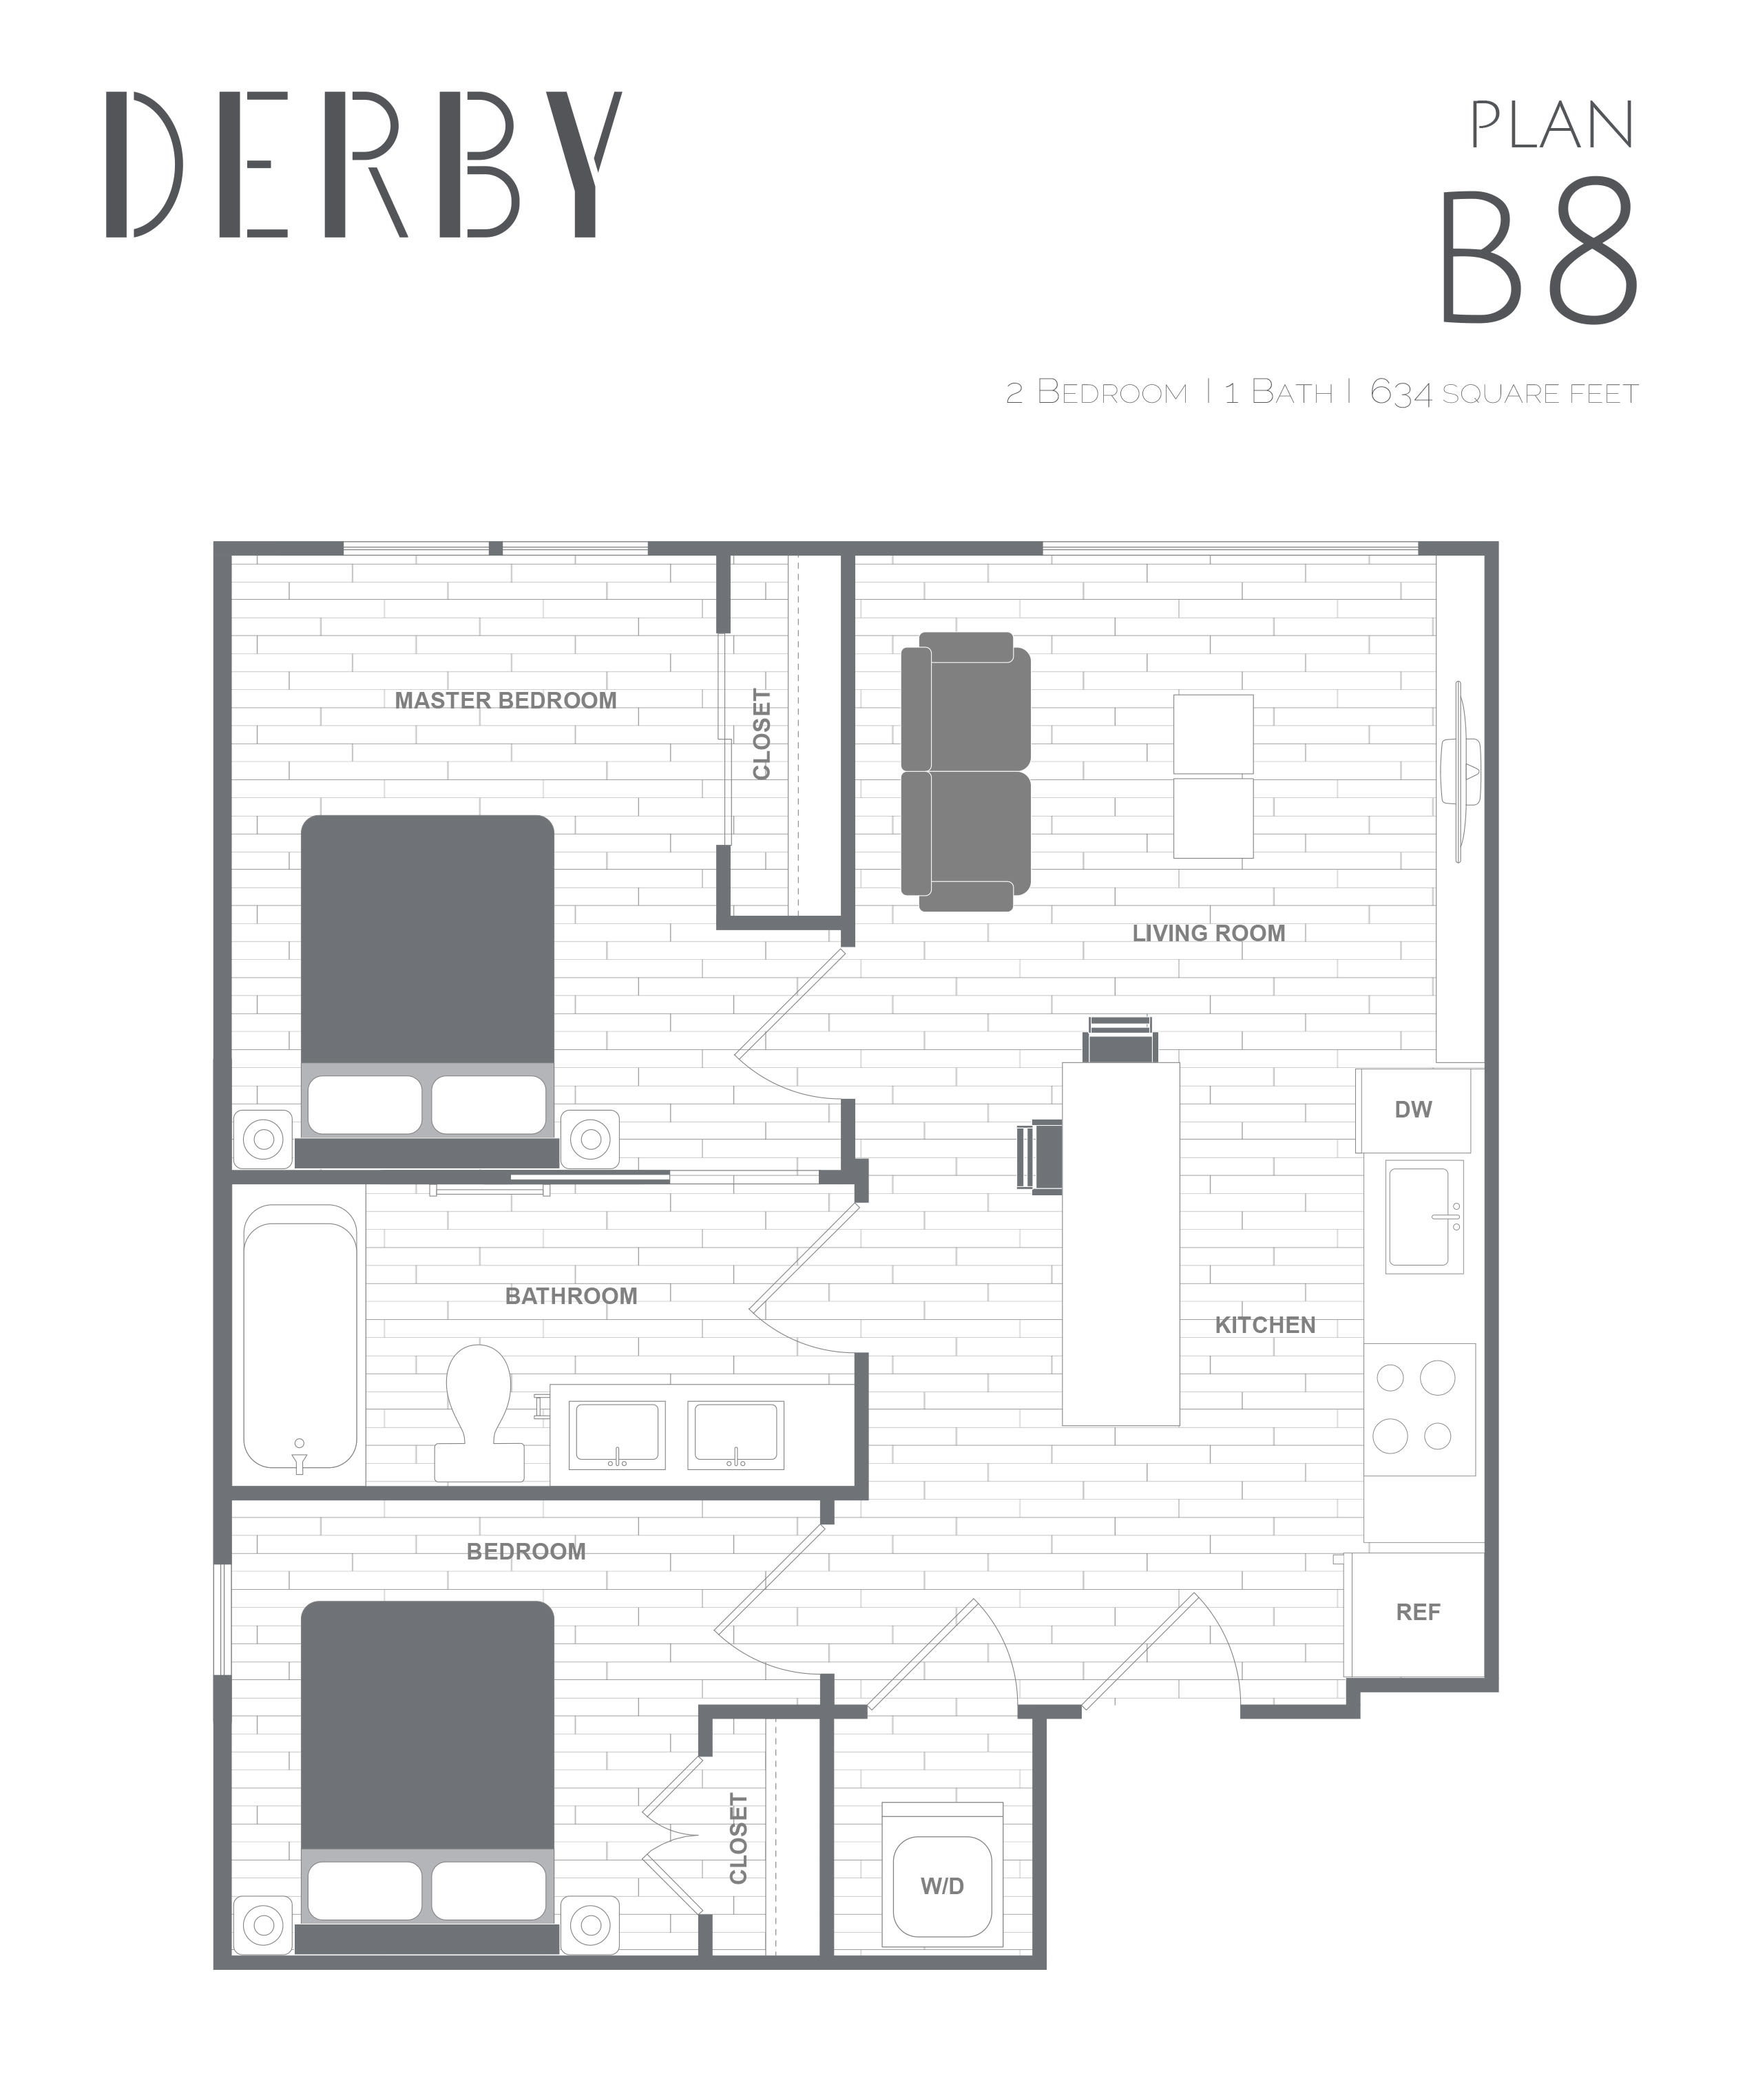 B8 floor plan